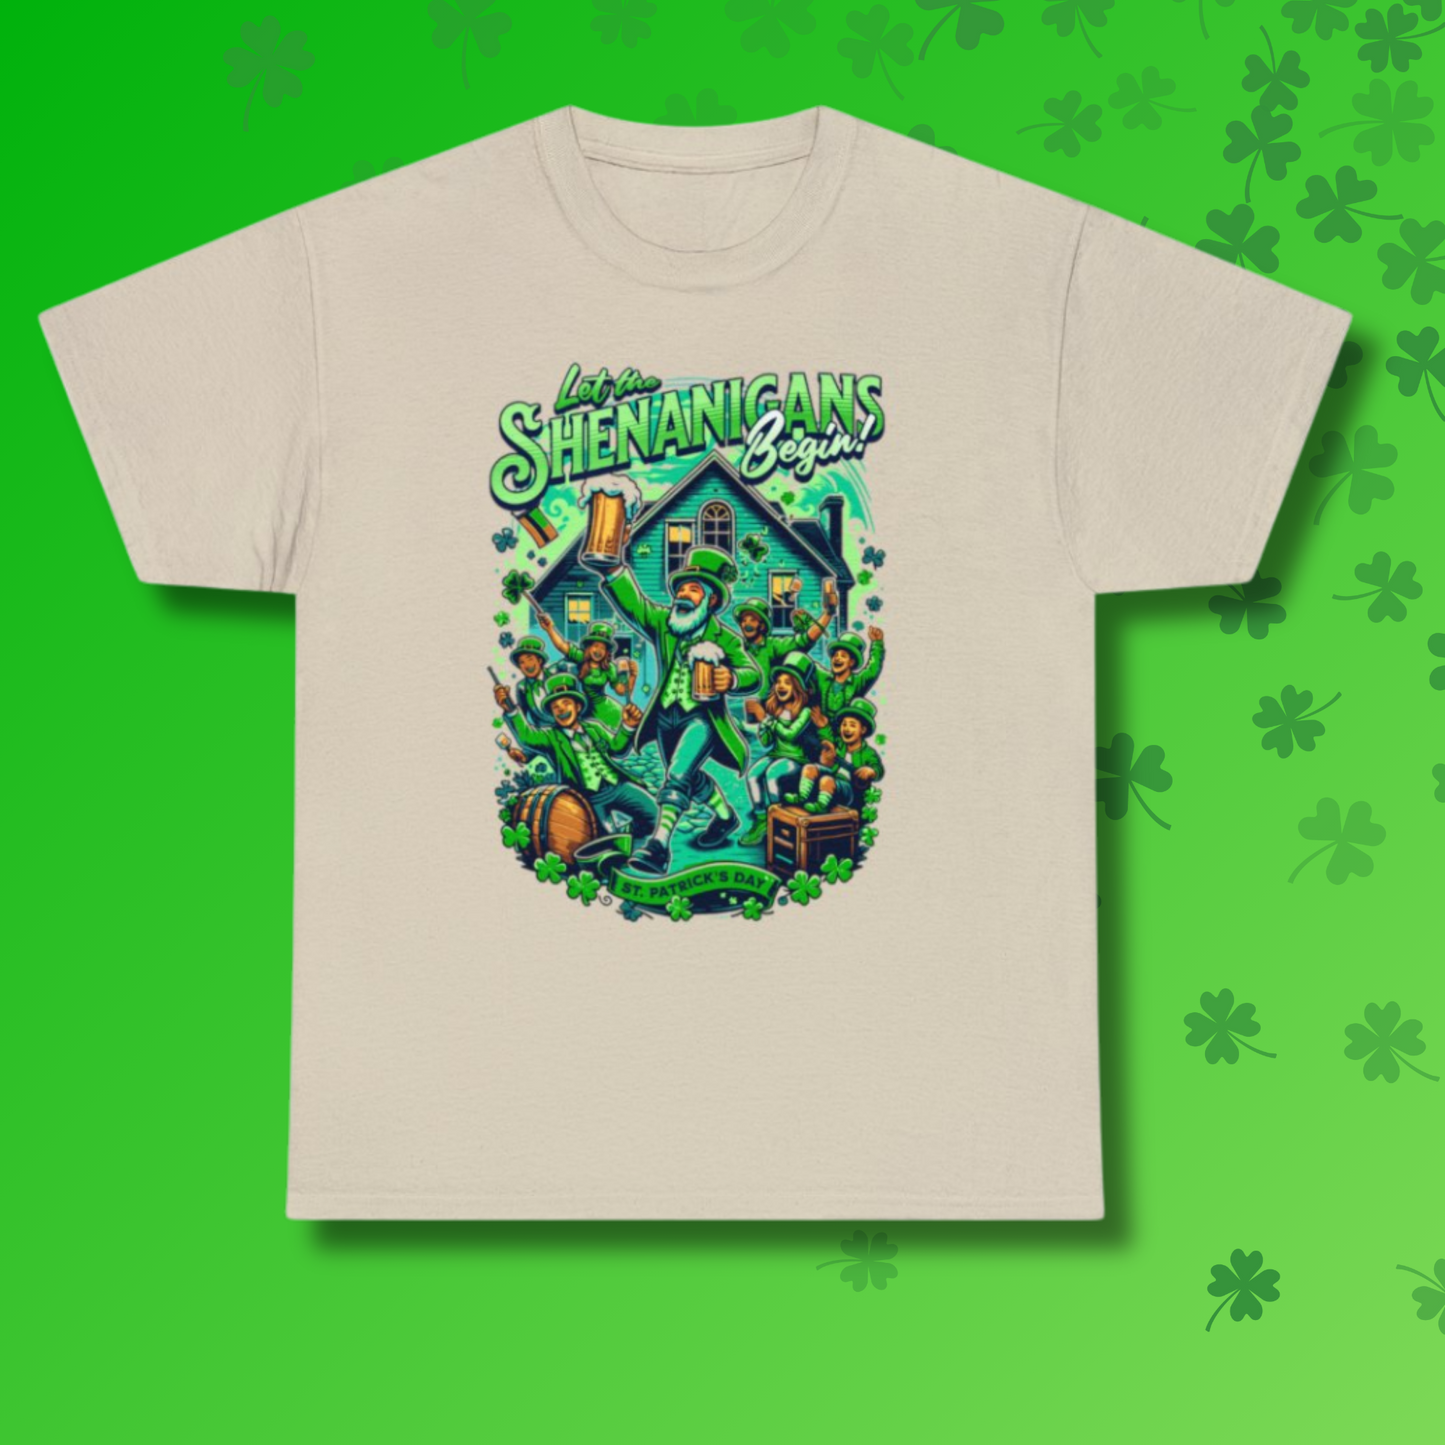 Let the Shenanigans Begin! - St. Patrick's Day Themed T-Shirt, St. Patrick's Day celebration shirt